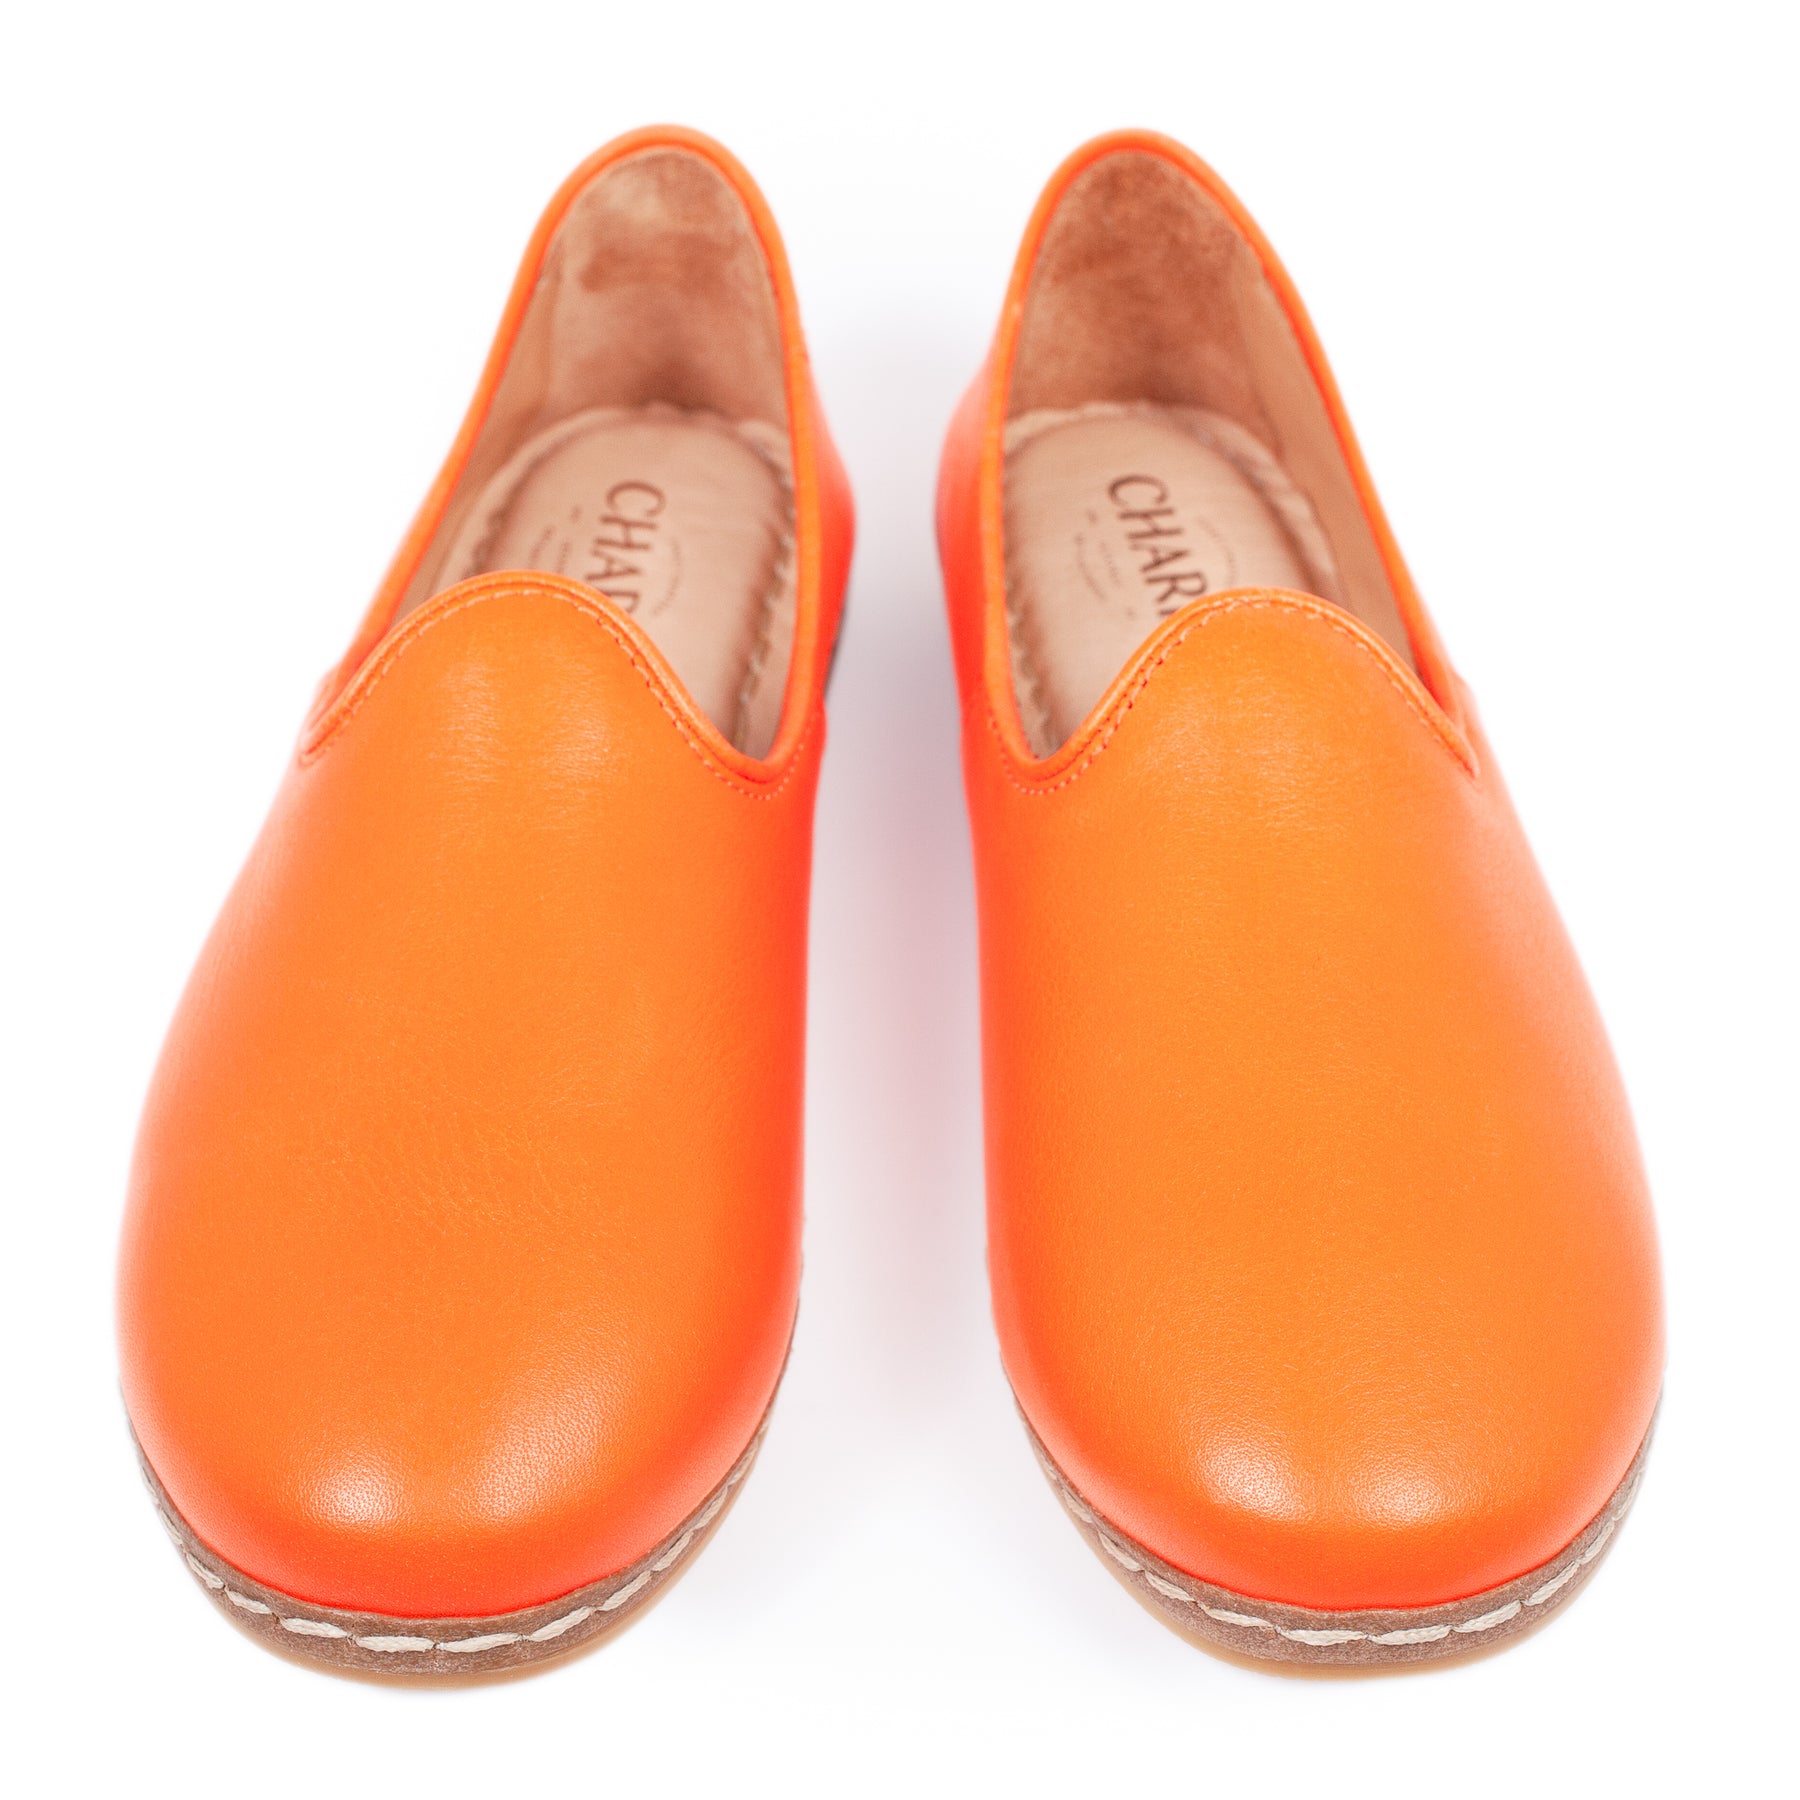 Orange - Women's - Charix Shoes